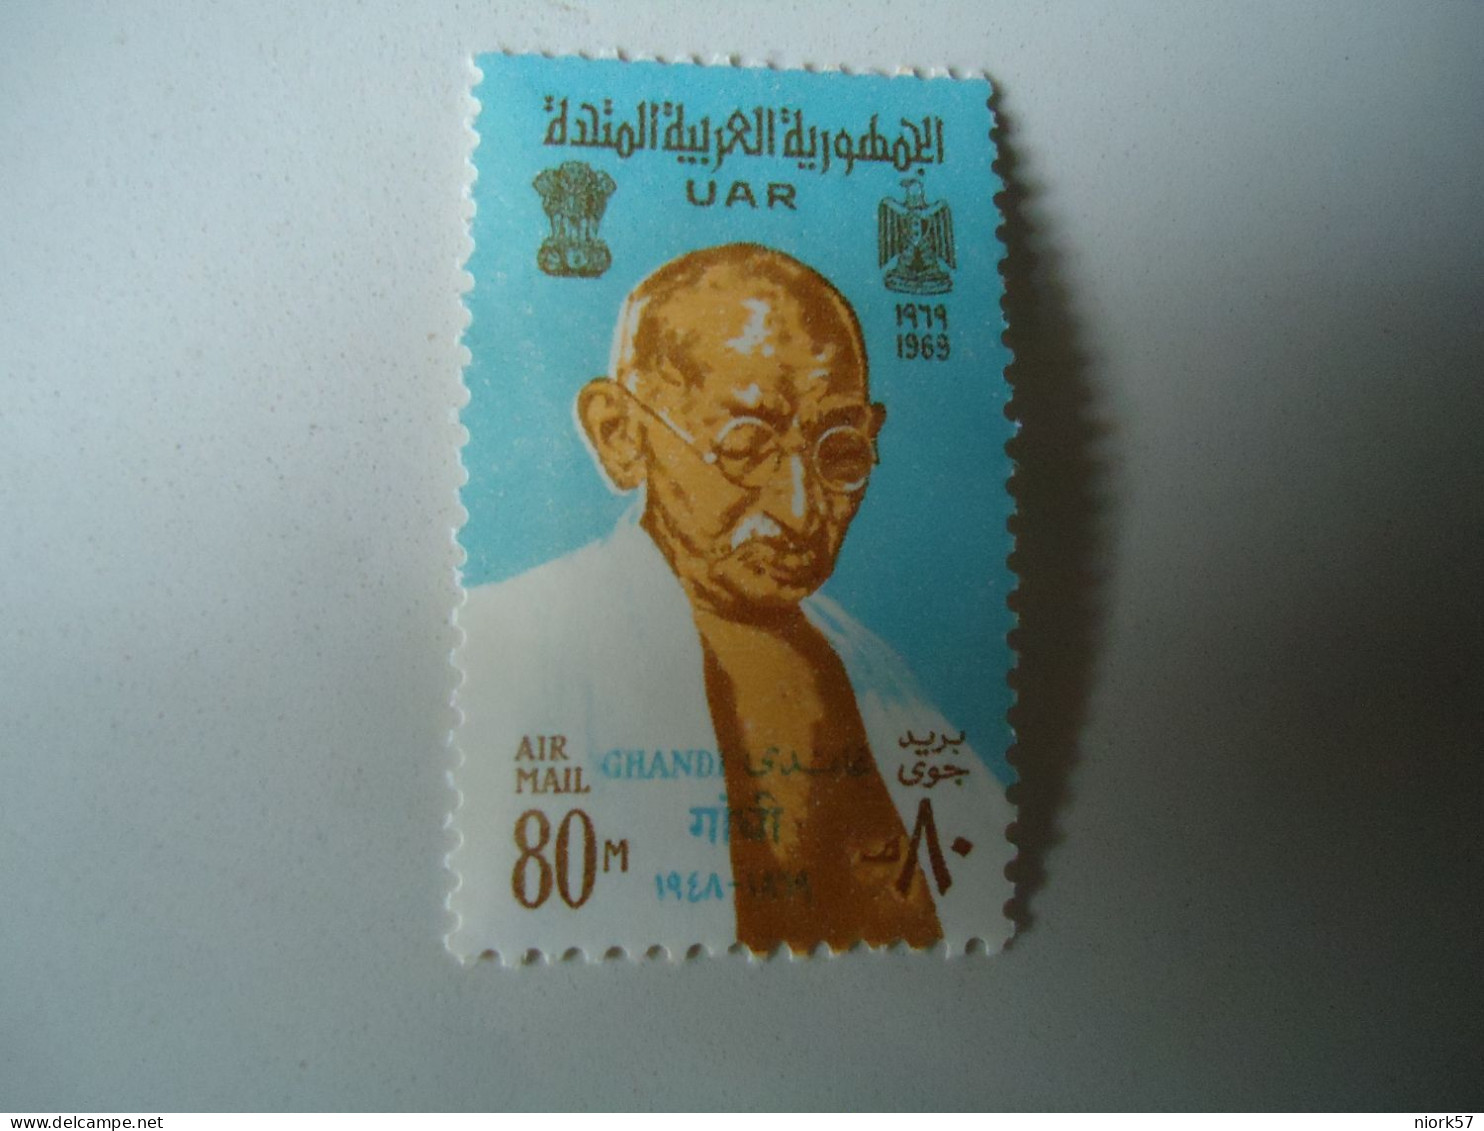 UAR   EGYPT  MLN STAMPS  GANDHI MAHATMA - Mahatma Gandhi